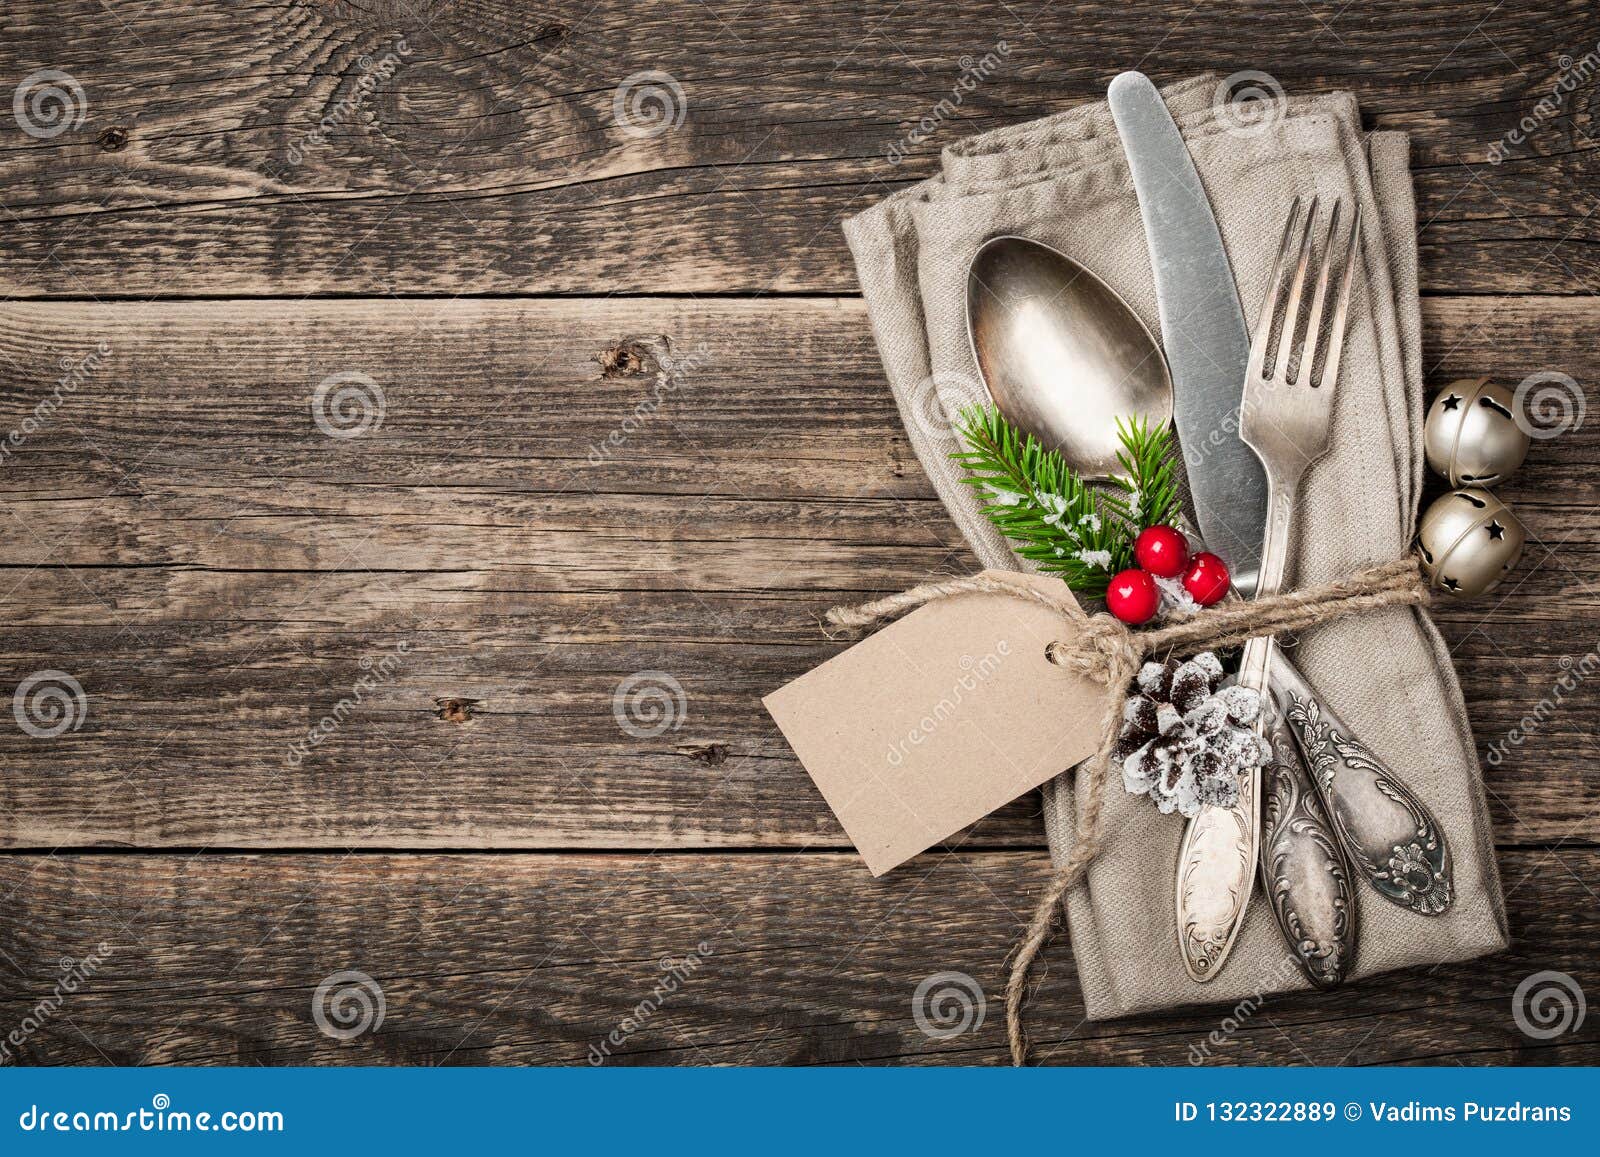 Christmas Table Setting Background Stock Image - Image of flatware ...